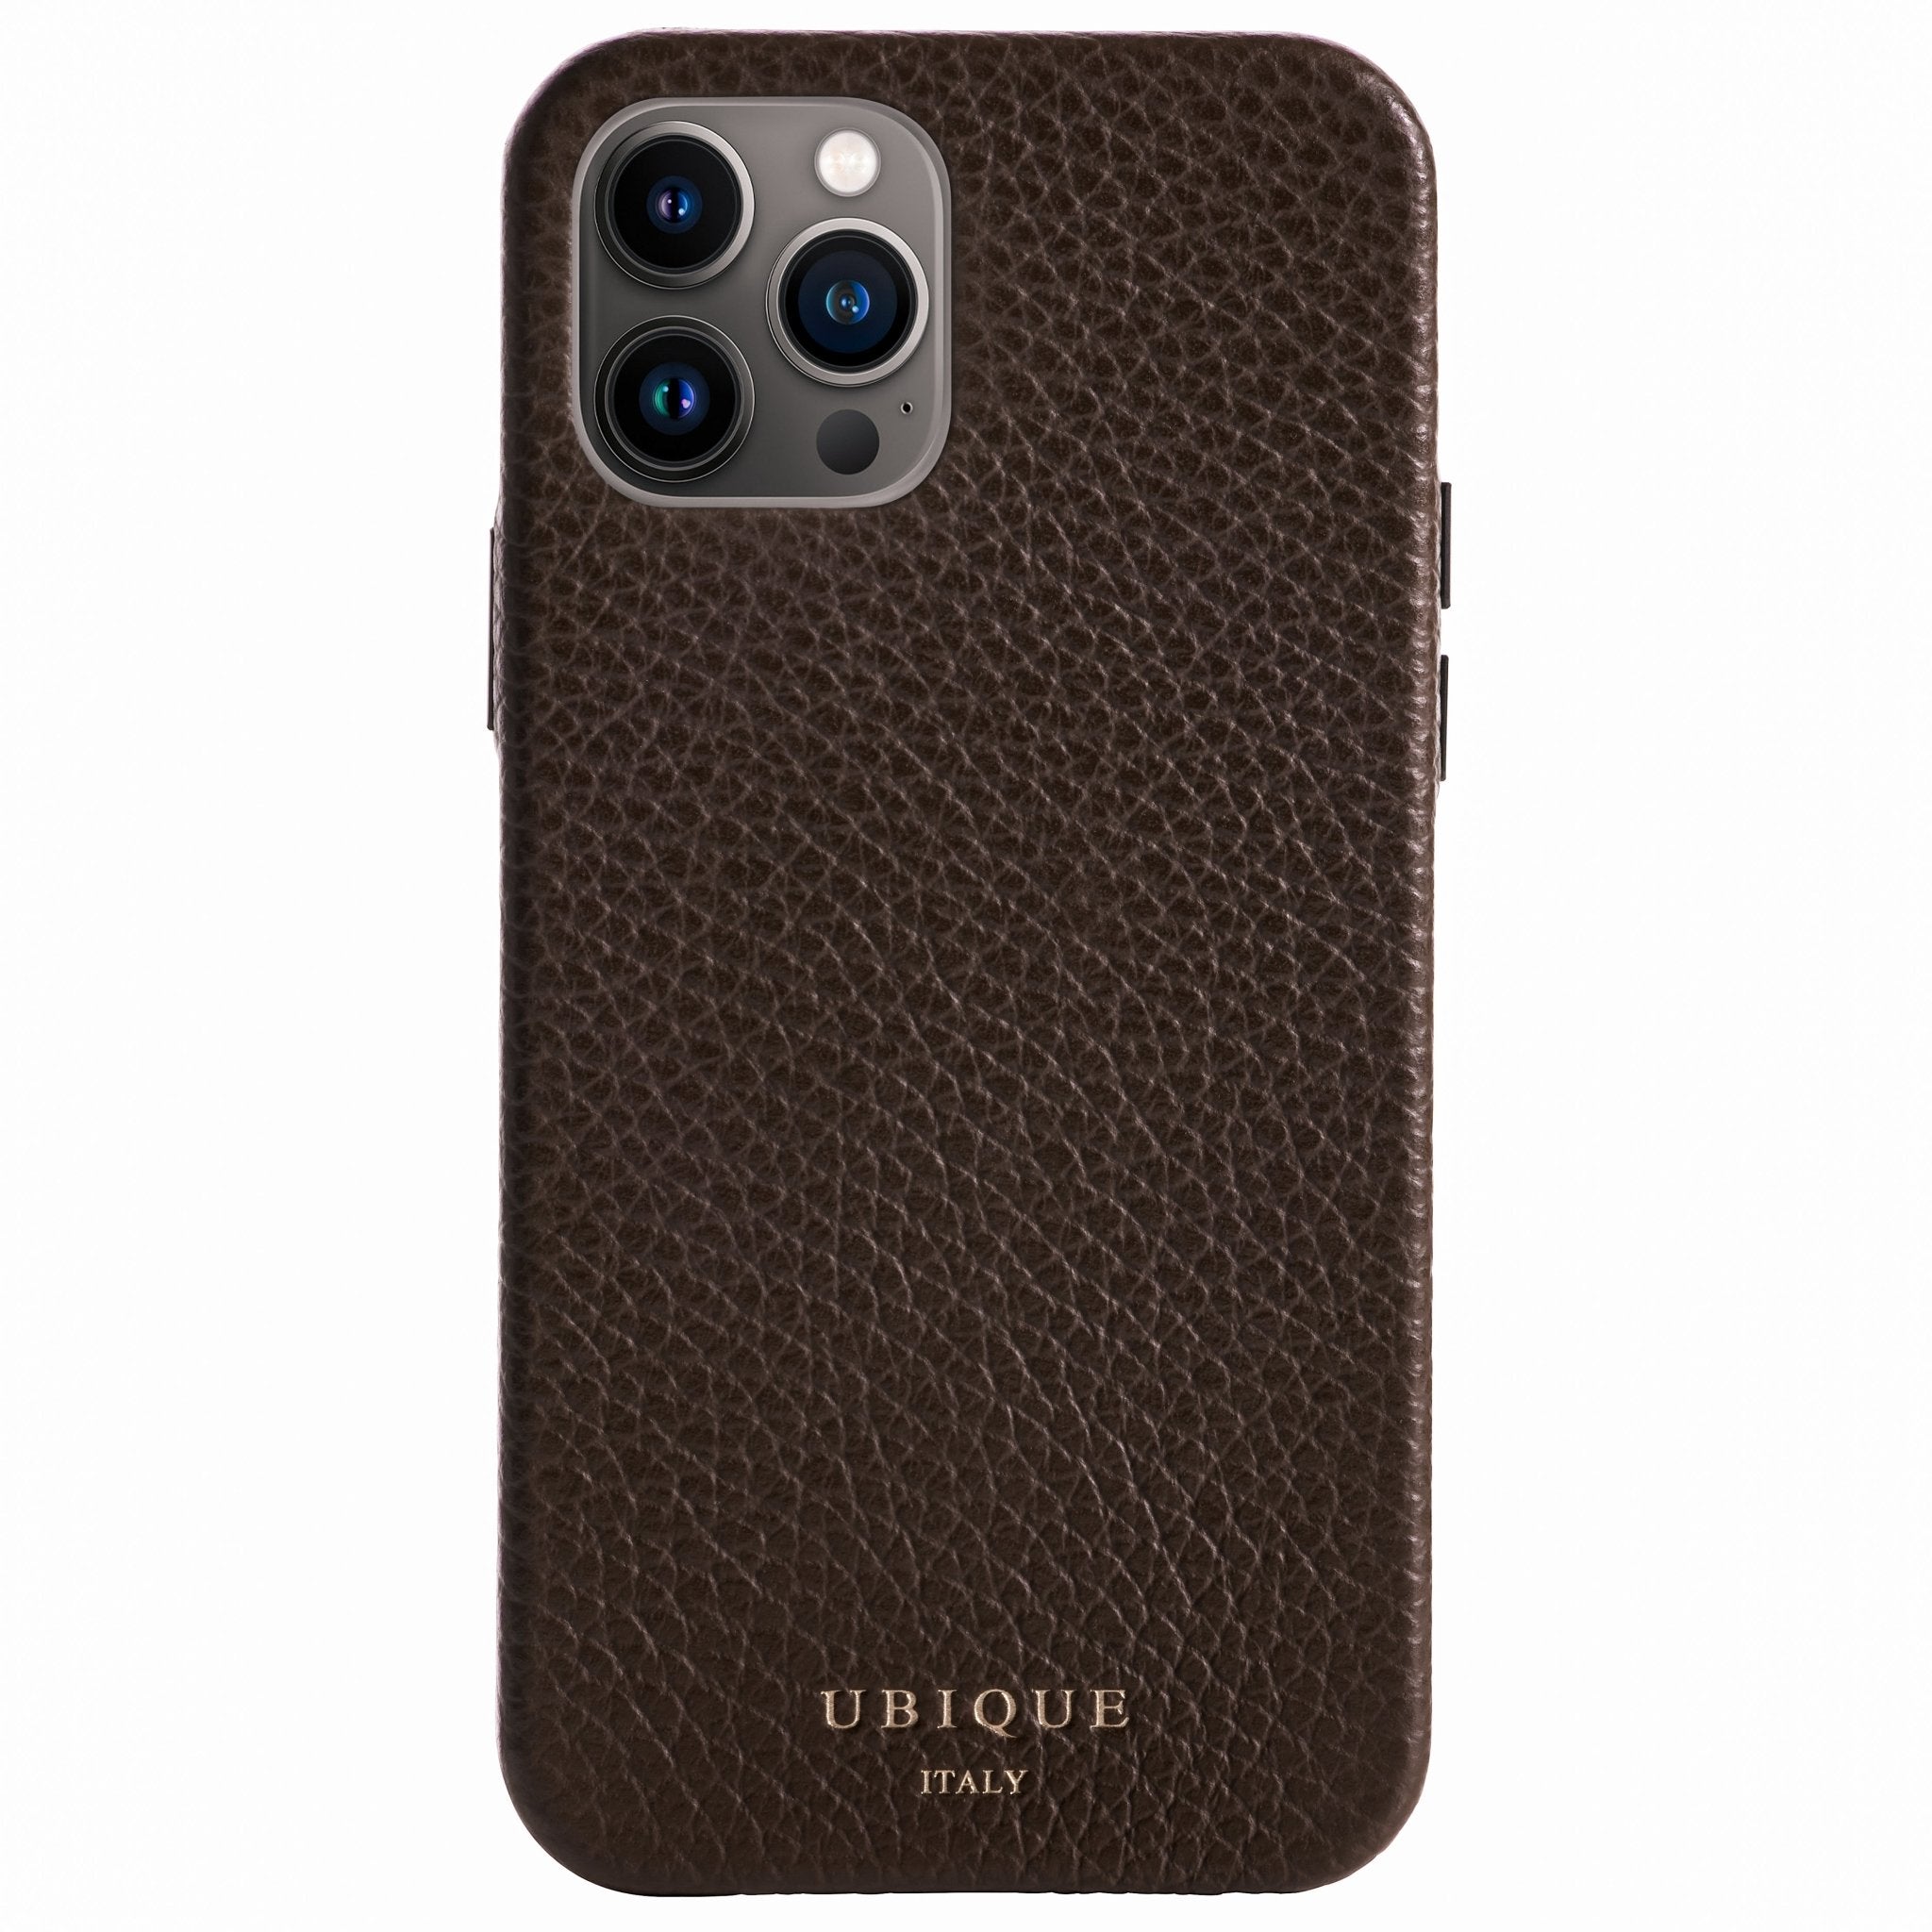 Ubique Italy Luxury iPhone Case 12 Pro Pebble Grain Leather Dark Walnut